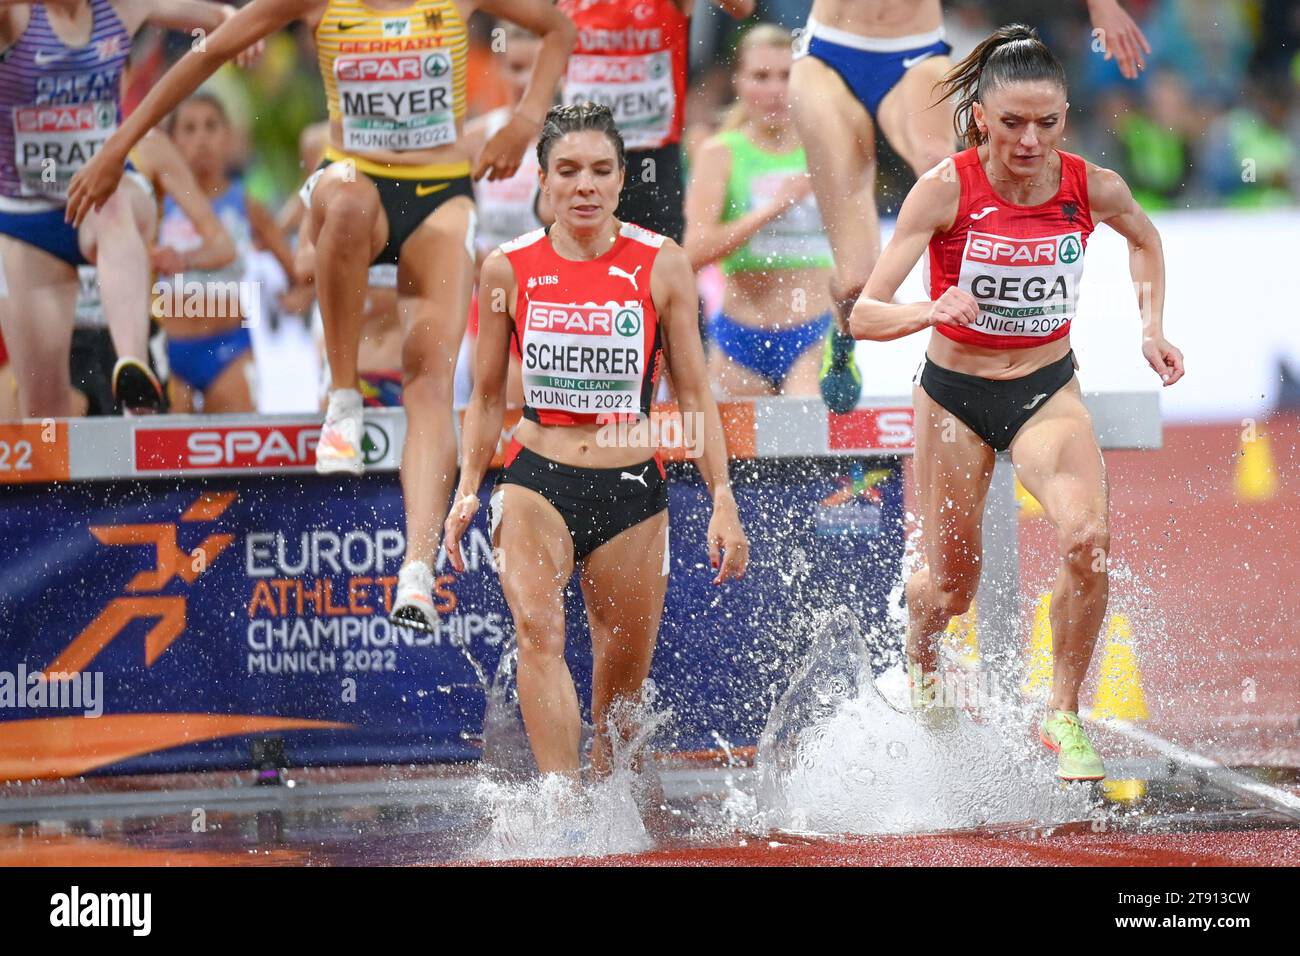 Luiza Gega (Albania). 3000 steeplechase Gold Medal. European Championships Munich 2022 Stock Photo